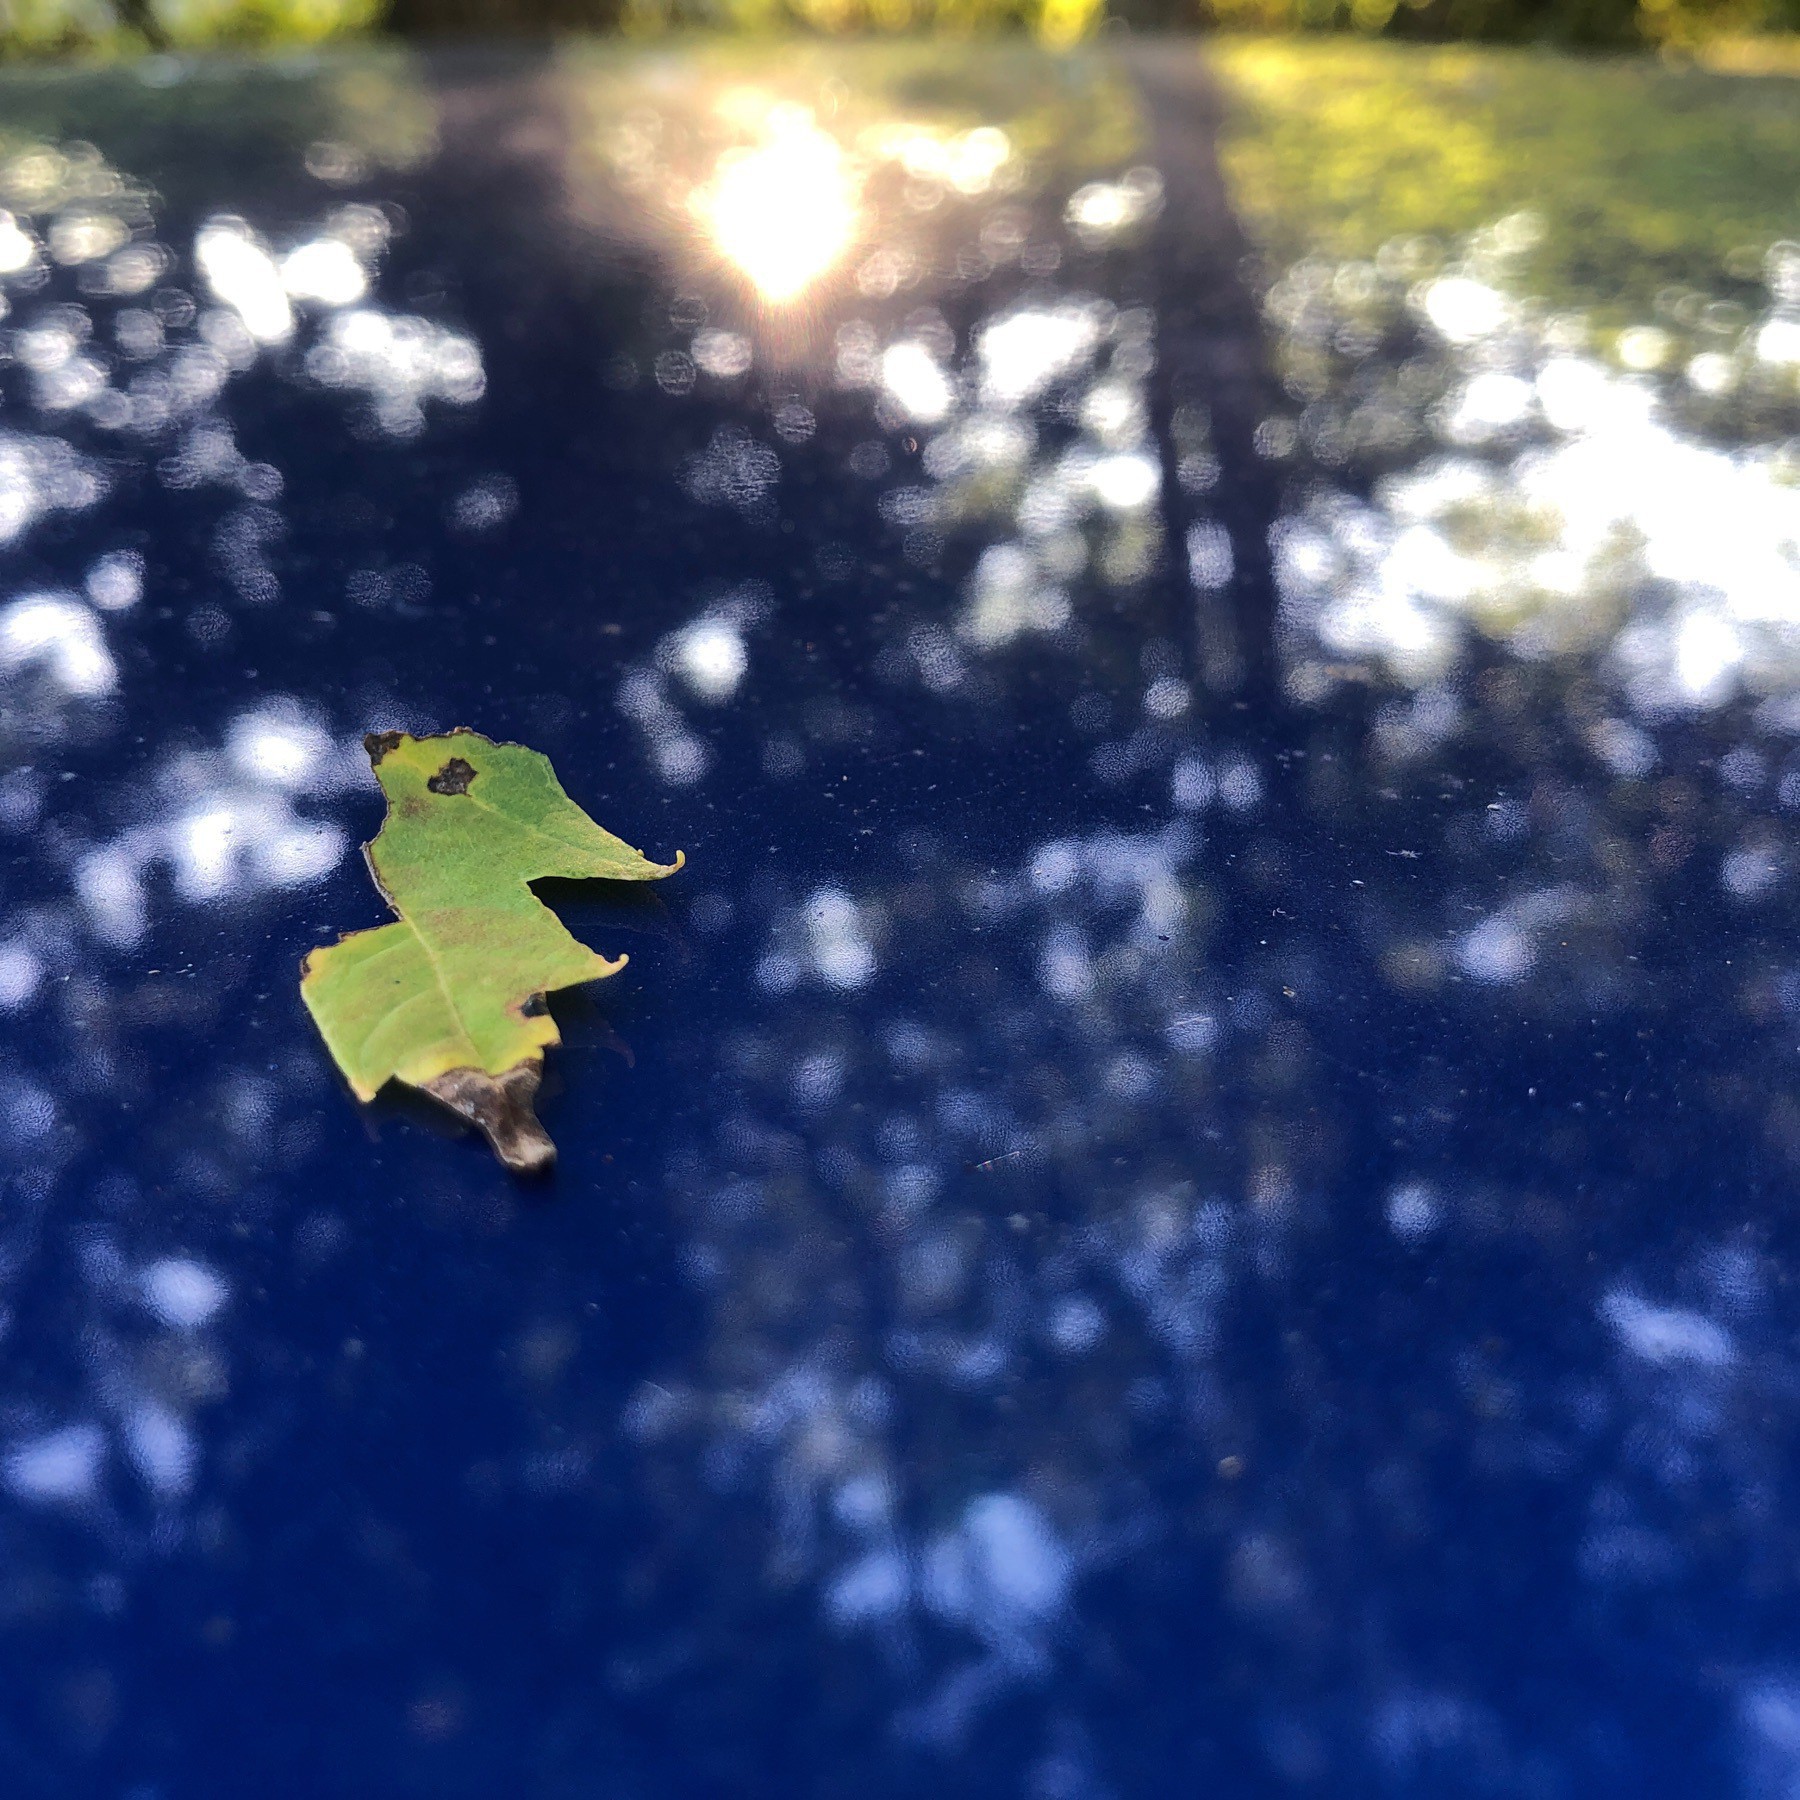 Leaf on car roof.